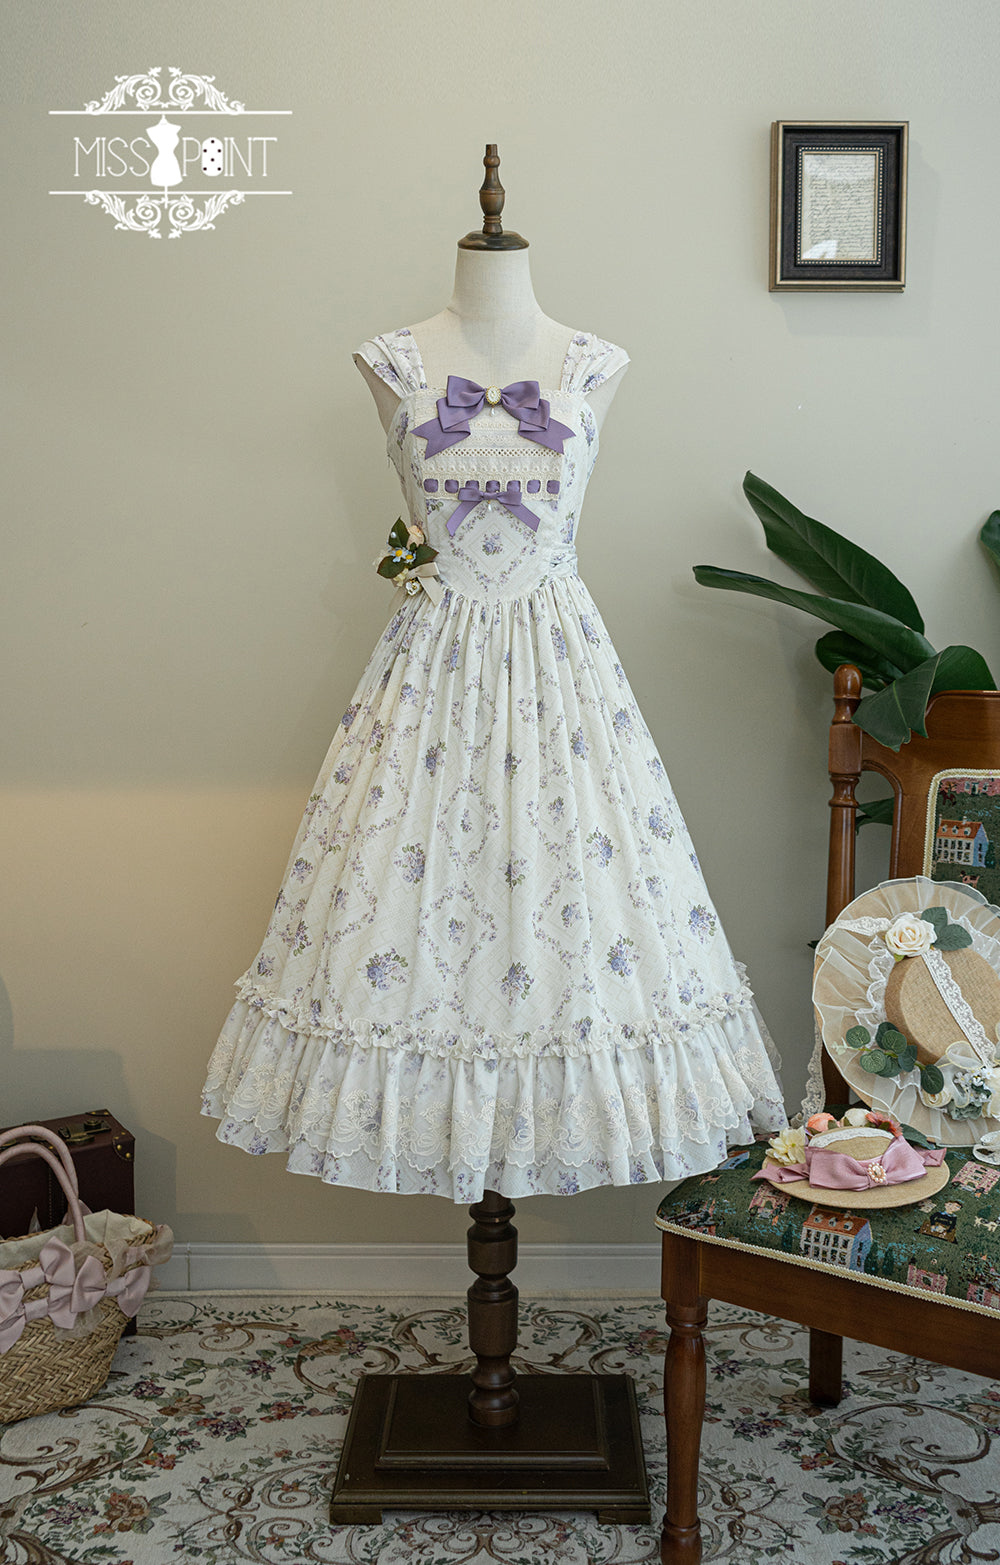 Miss Point~Customized Wood Rose 2.0 Elegant Vintage Jumper Skirt XS purple 